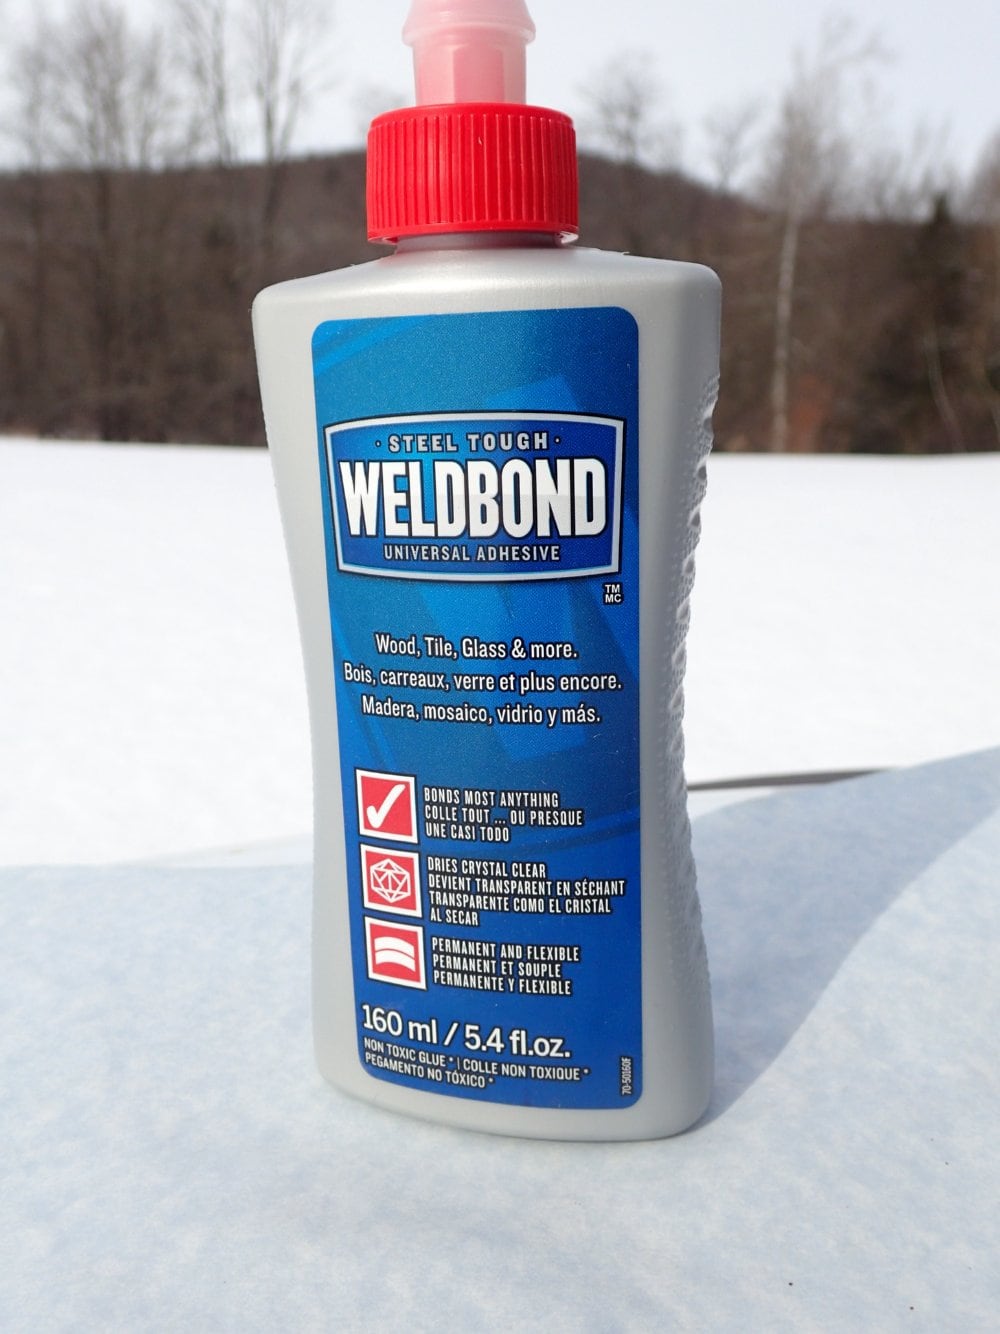 5.4oz Weldbond Adhesive